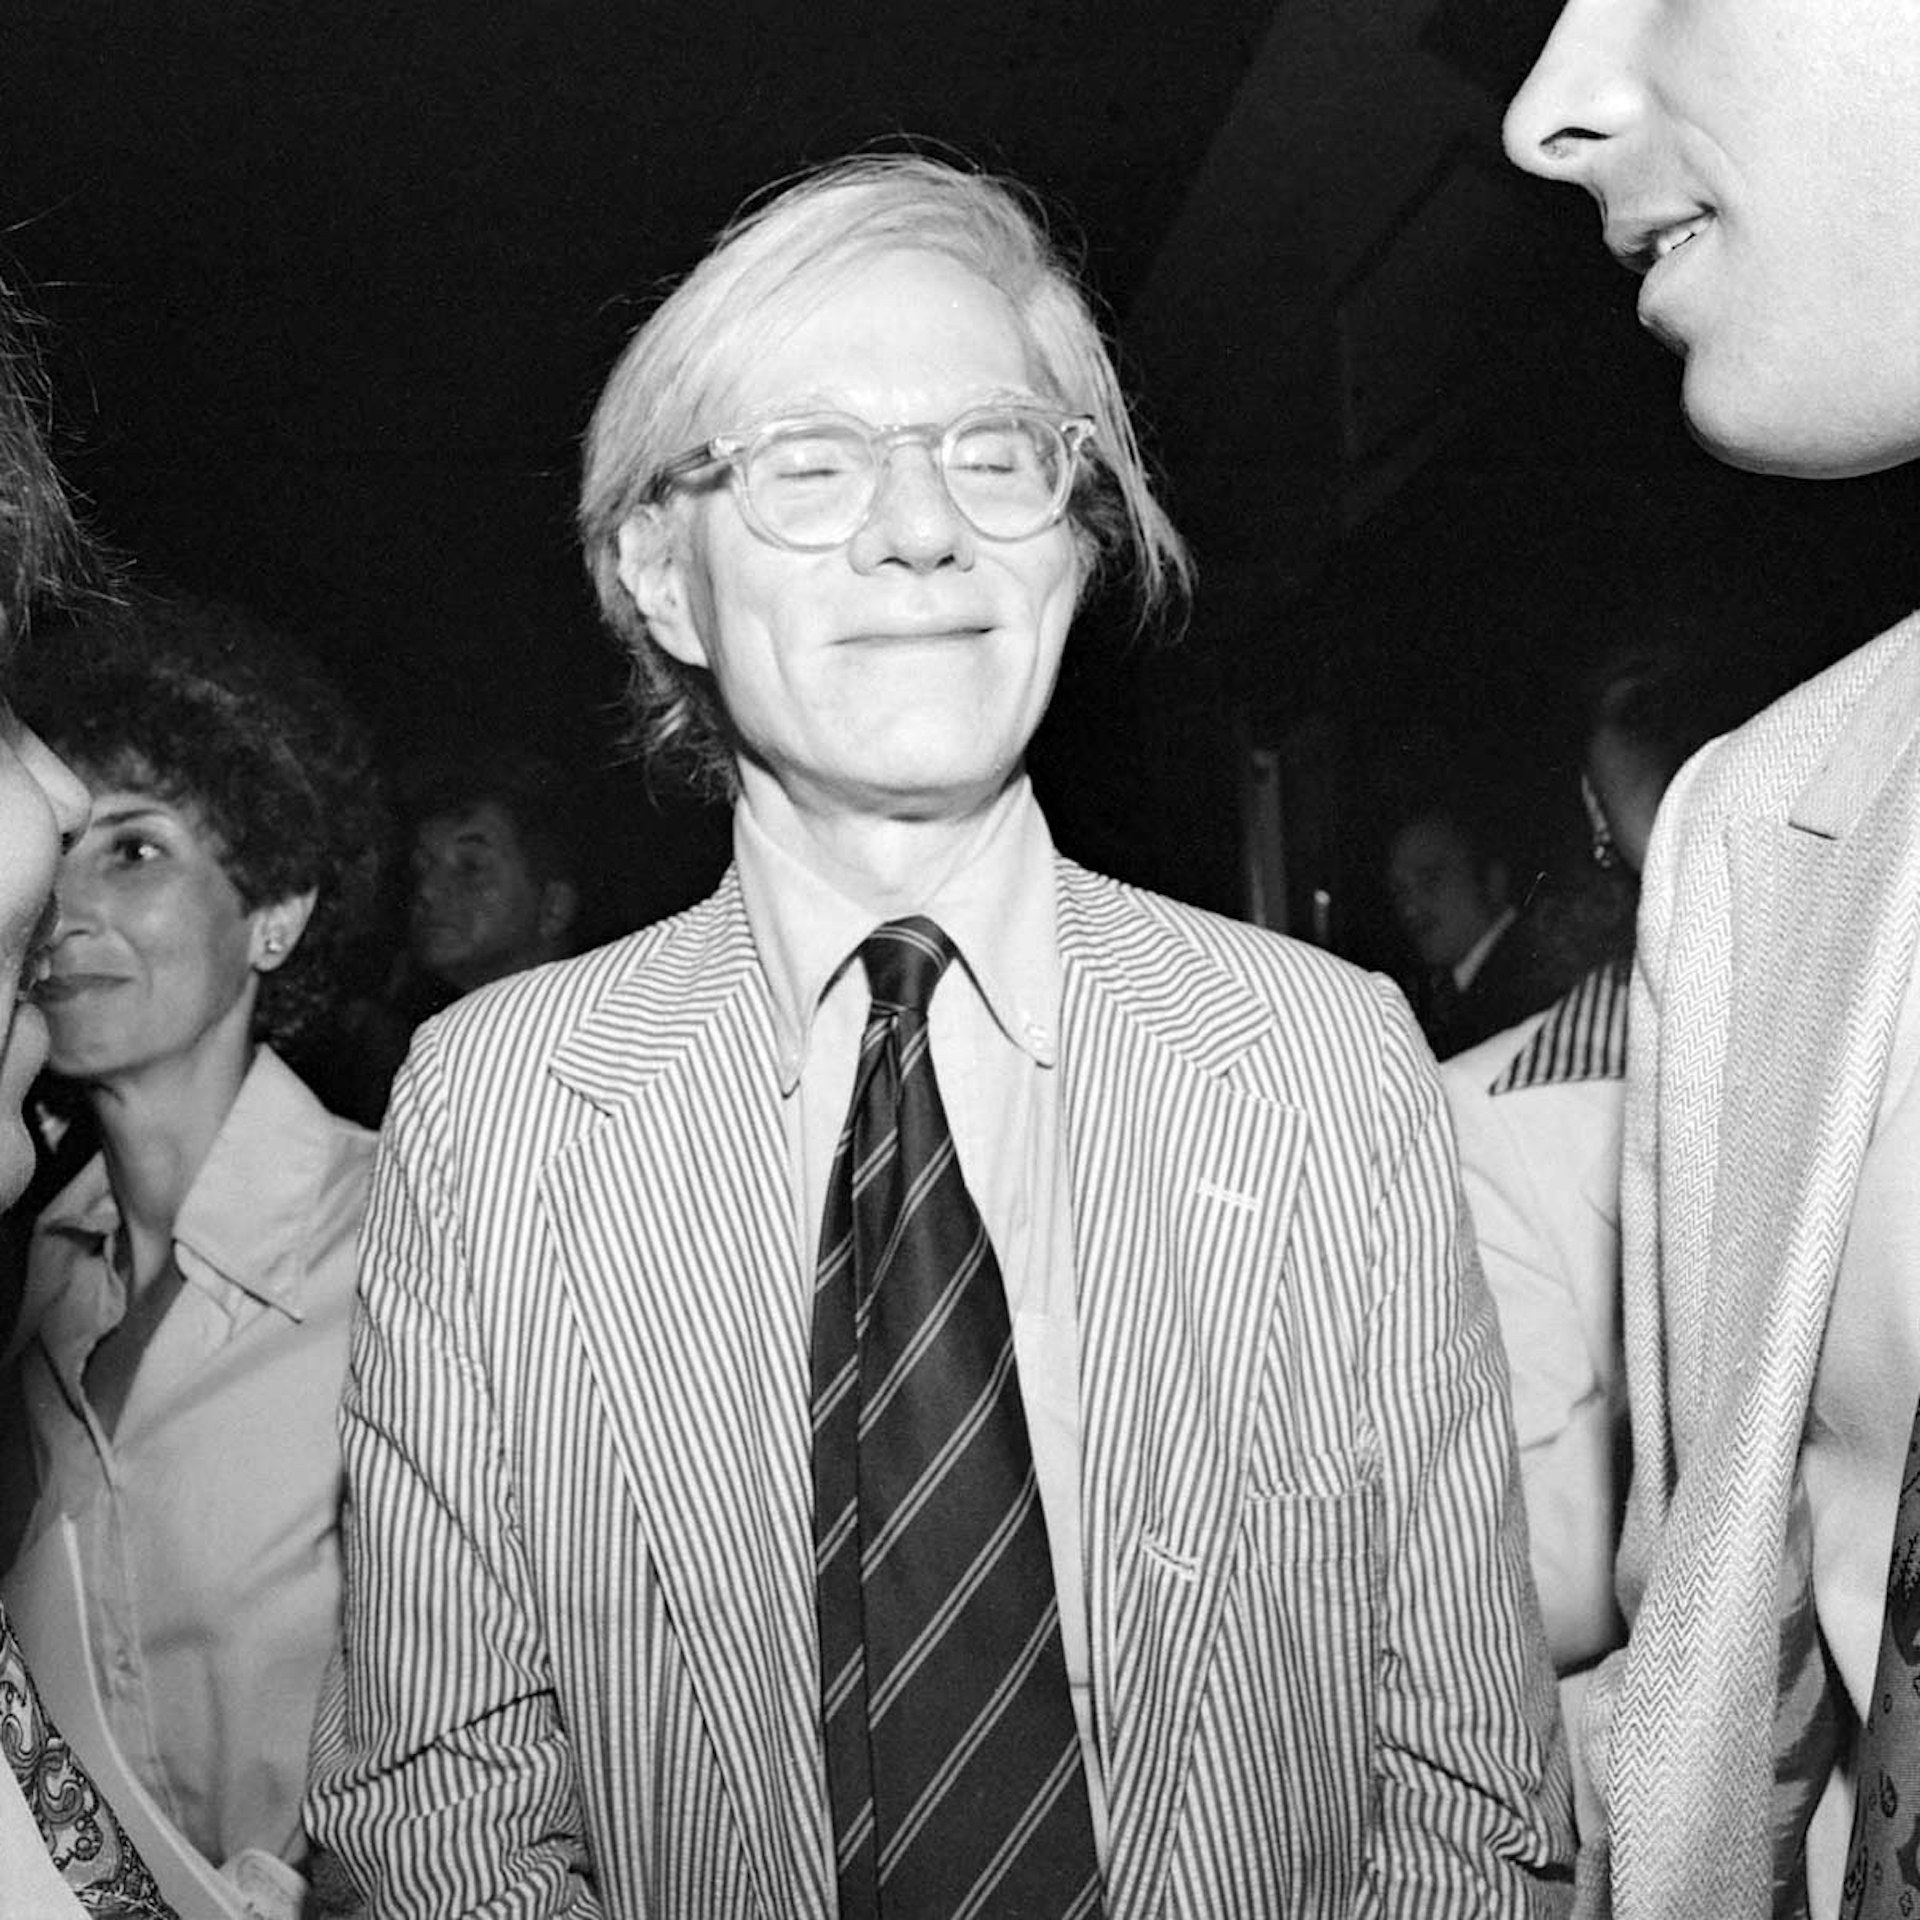 Warhol Eyes Closed (between his friend and Judi Jupiter), Studio 54, July 1977